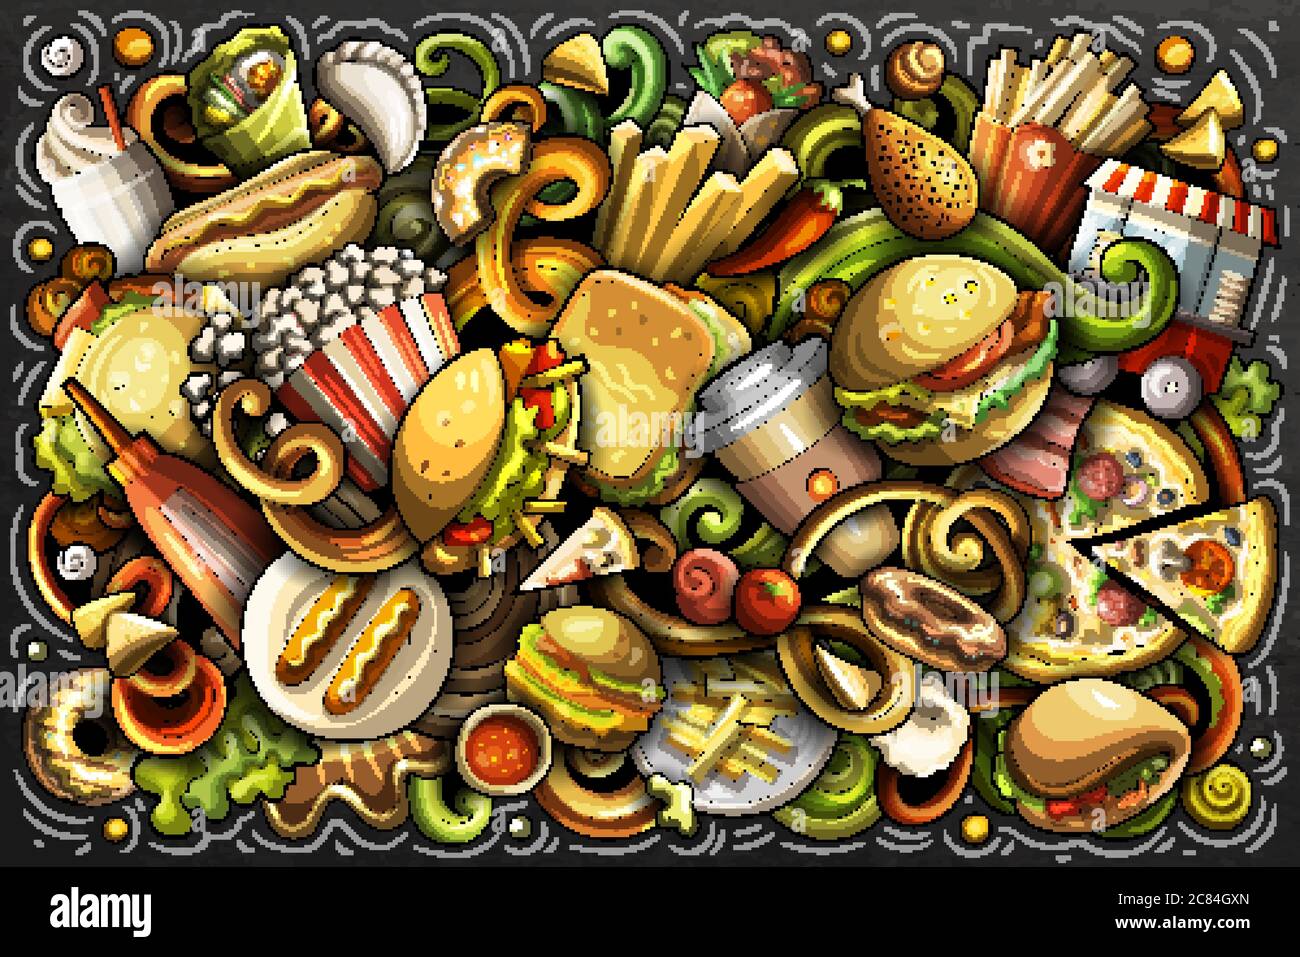 cartoon junk food collage